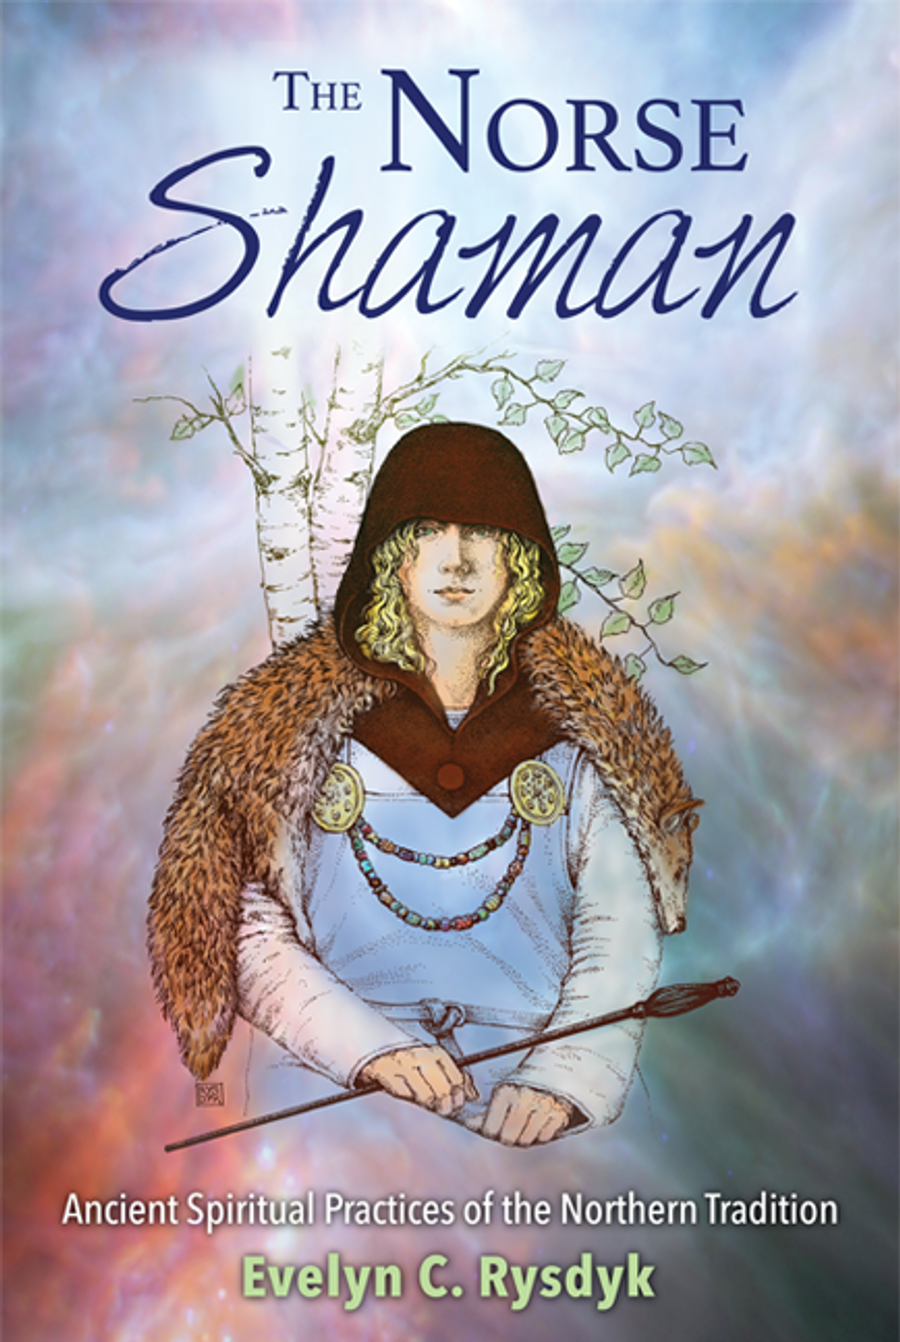 Norse Shaman by Evelyn C. Rysdyk